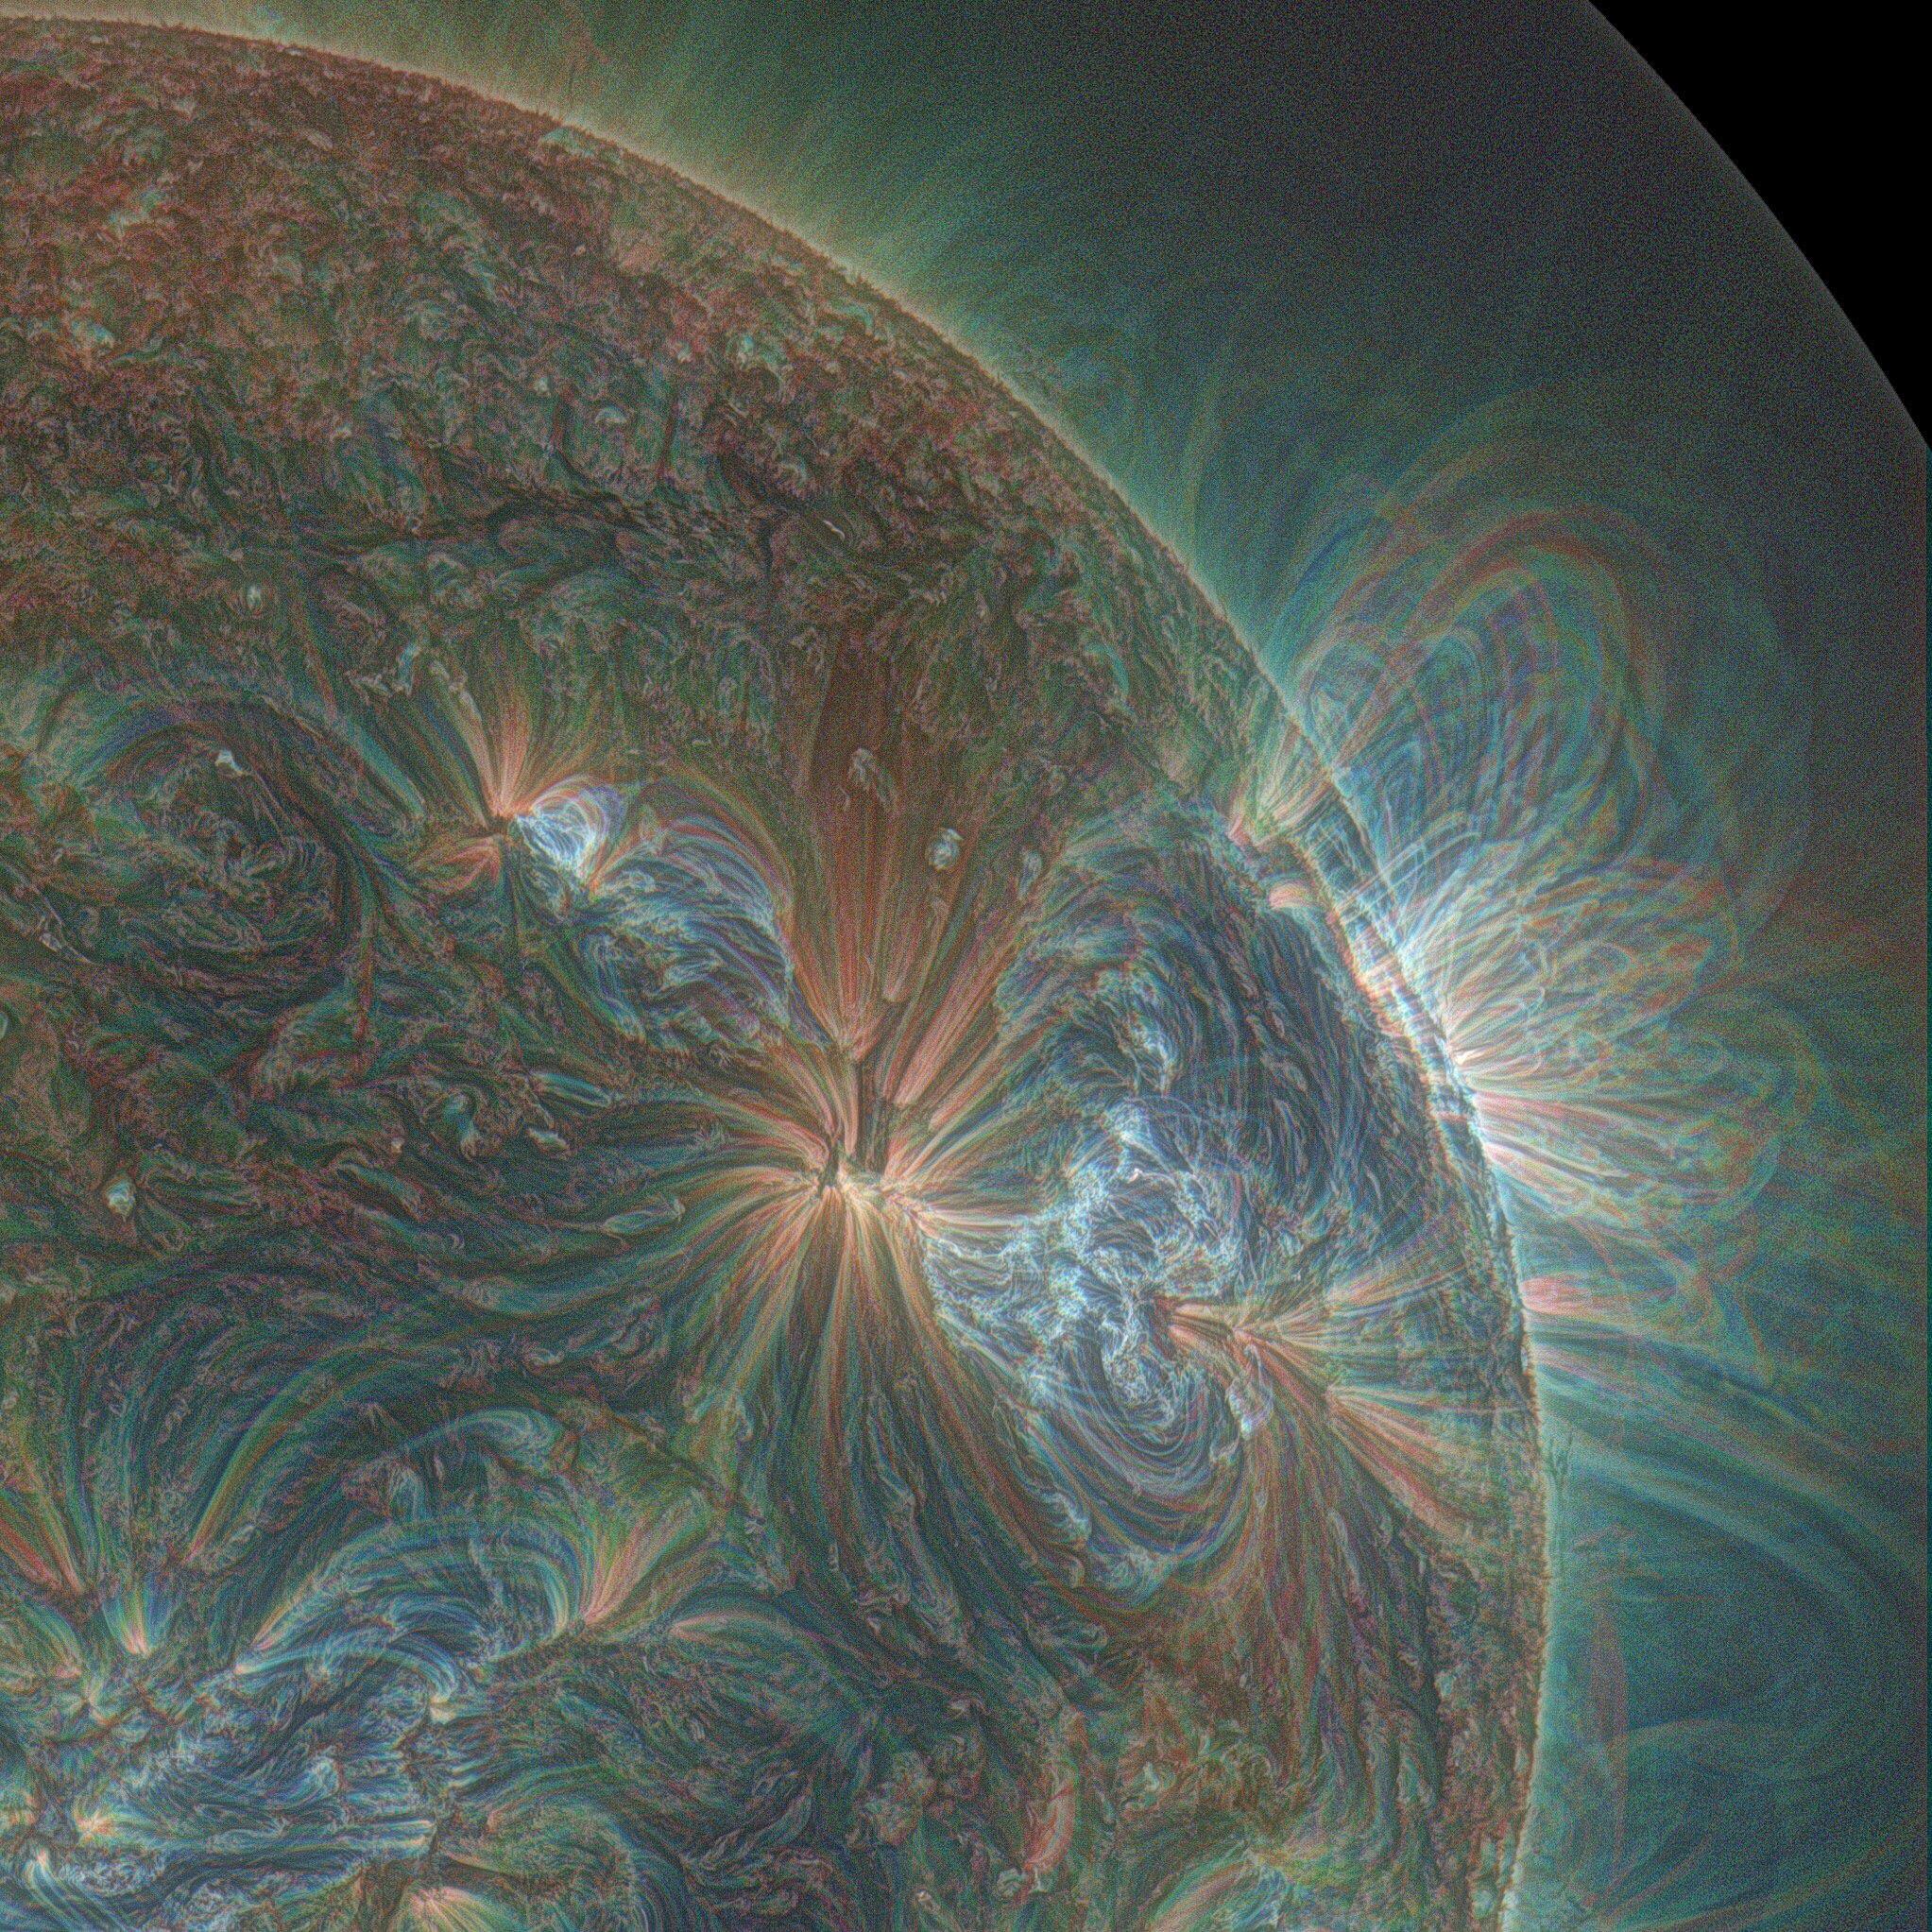 Sun Ultraviolet NASA Filter Photography Grain 2045x2045